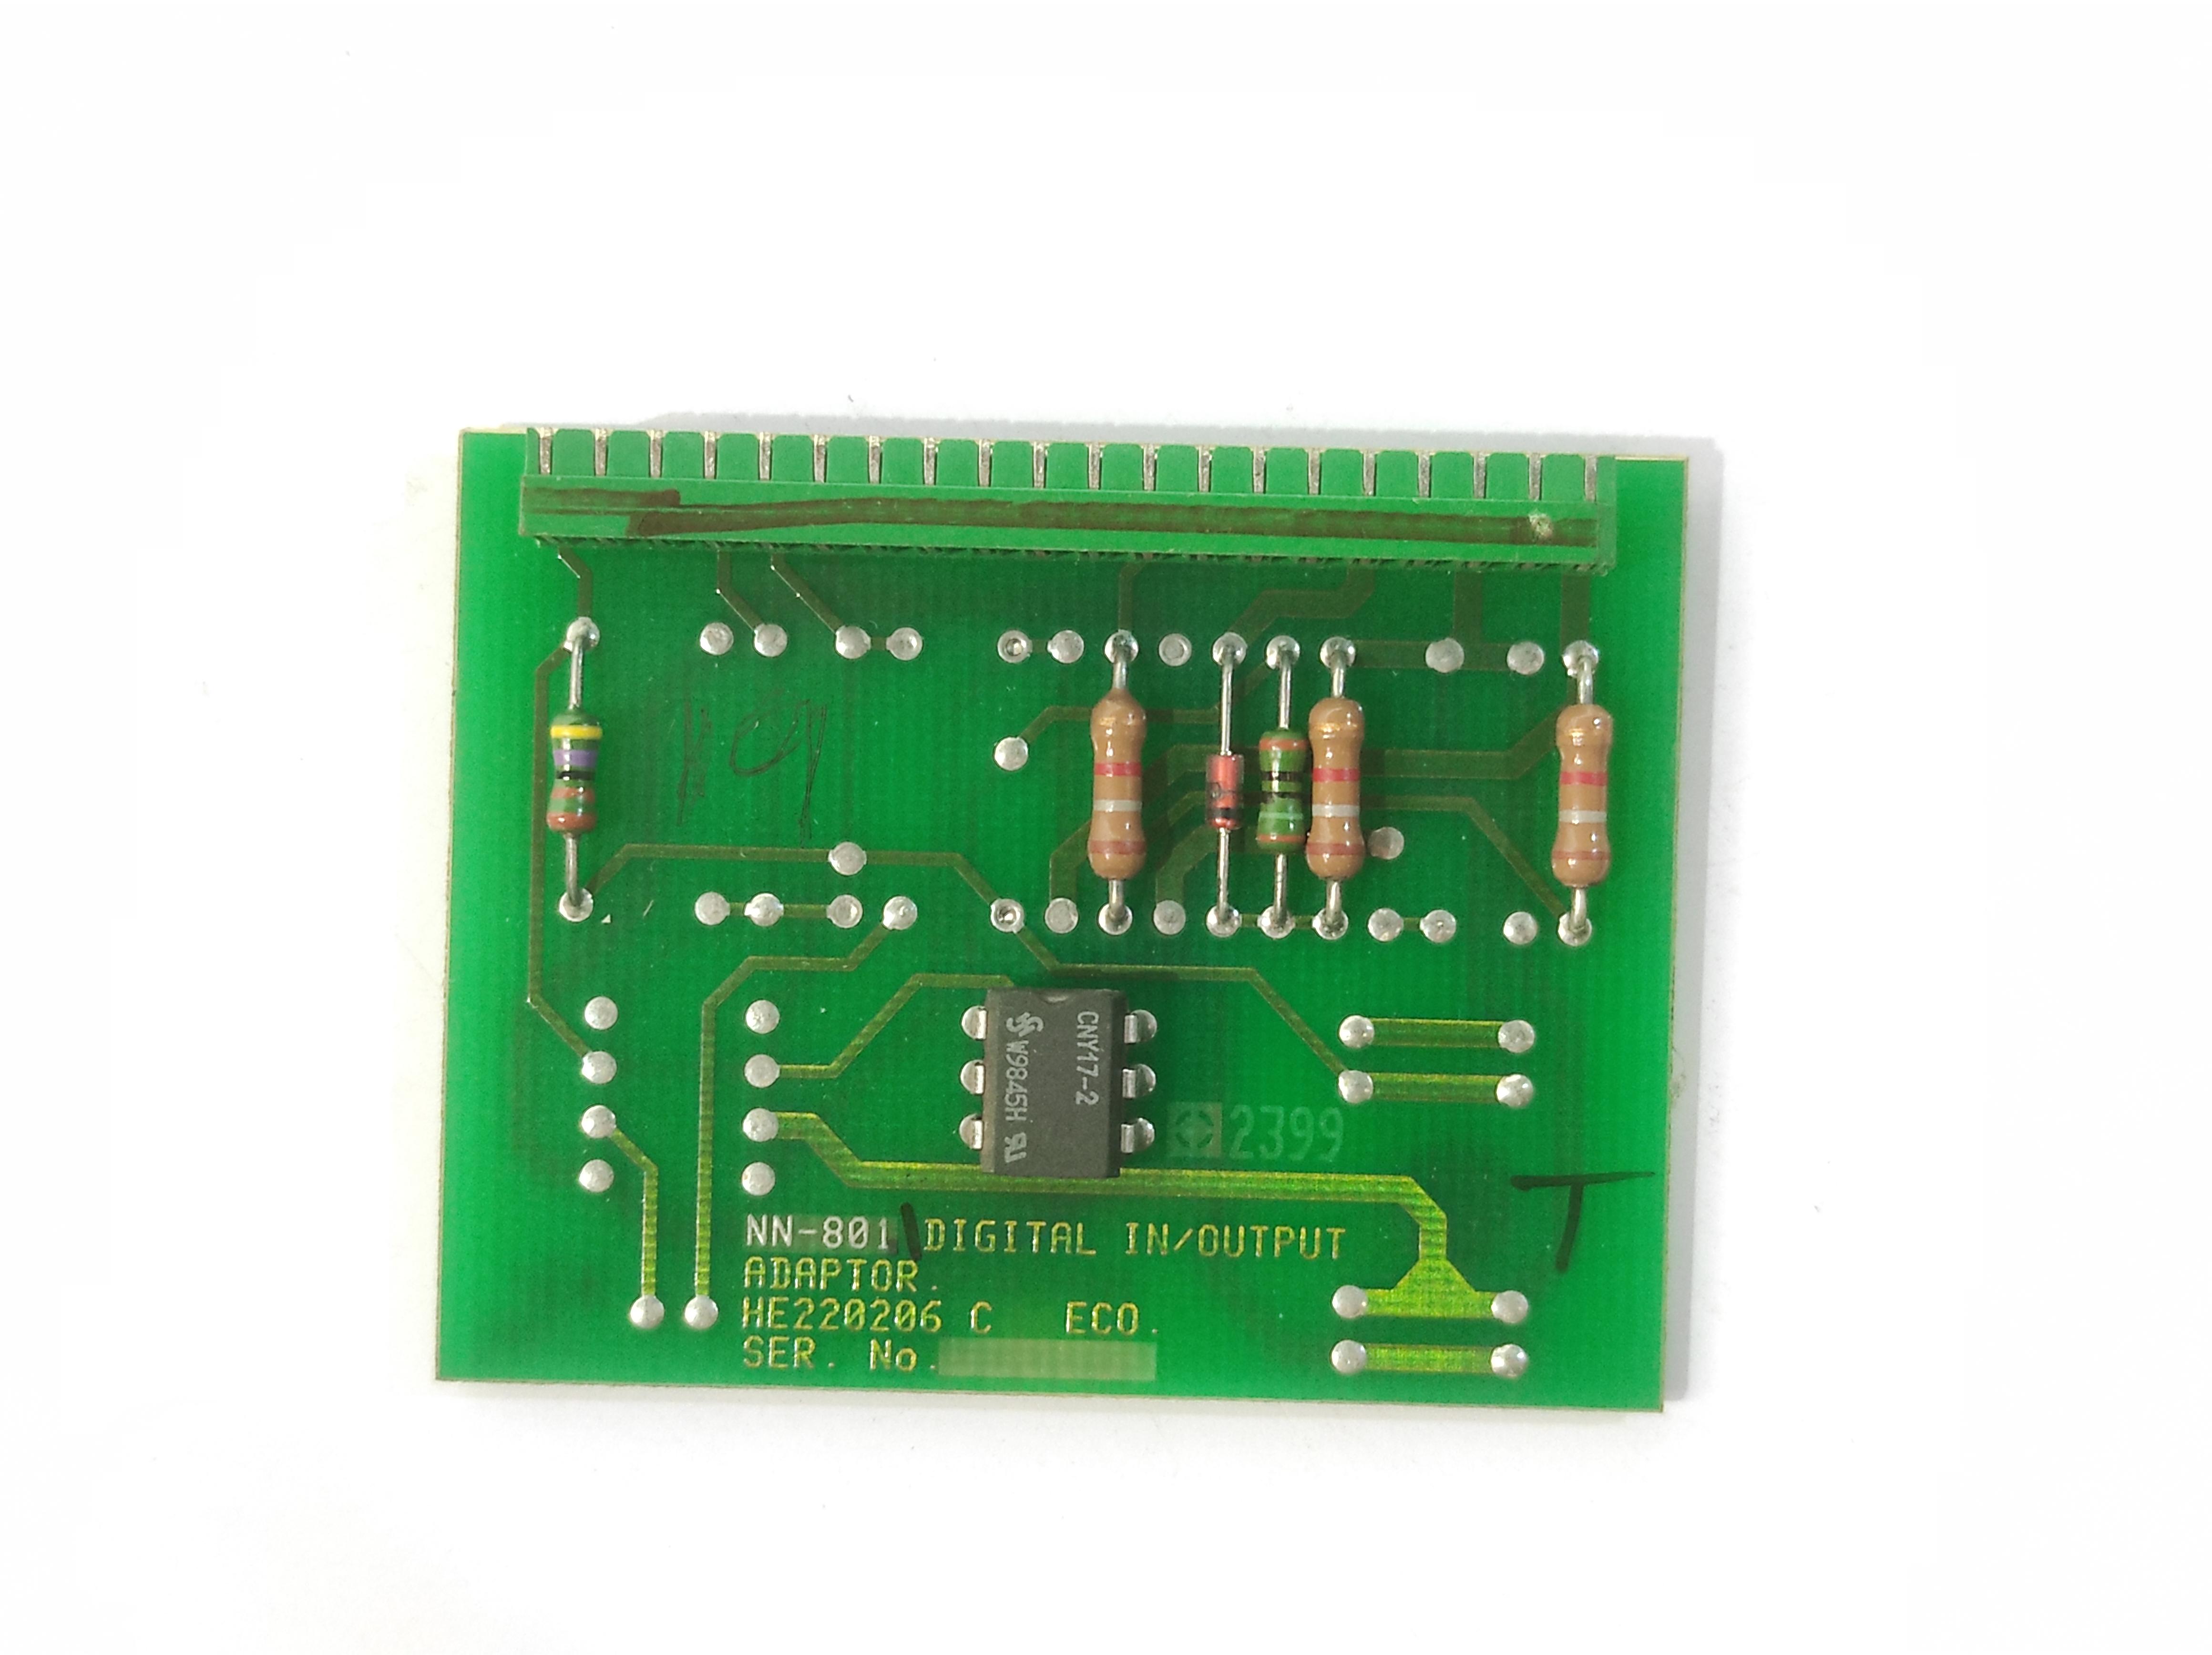 NOR Control NN-801.1 Digital INOutput Adaptor PCB HE220206 C